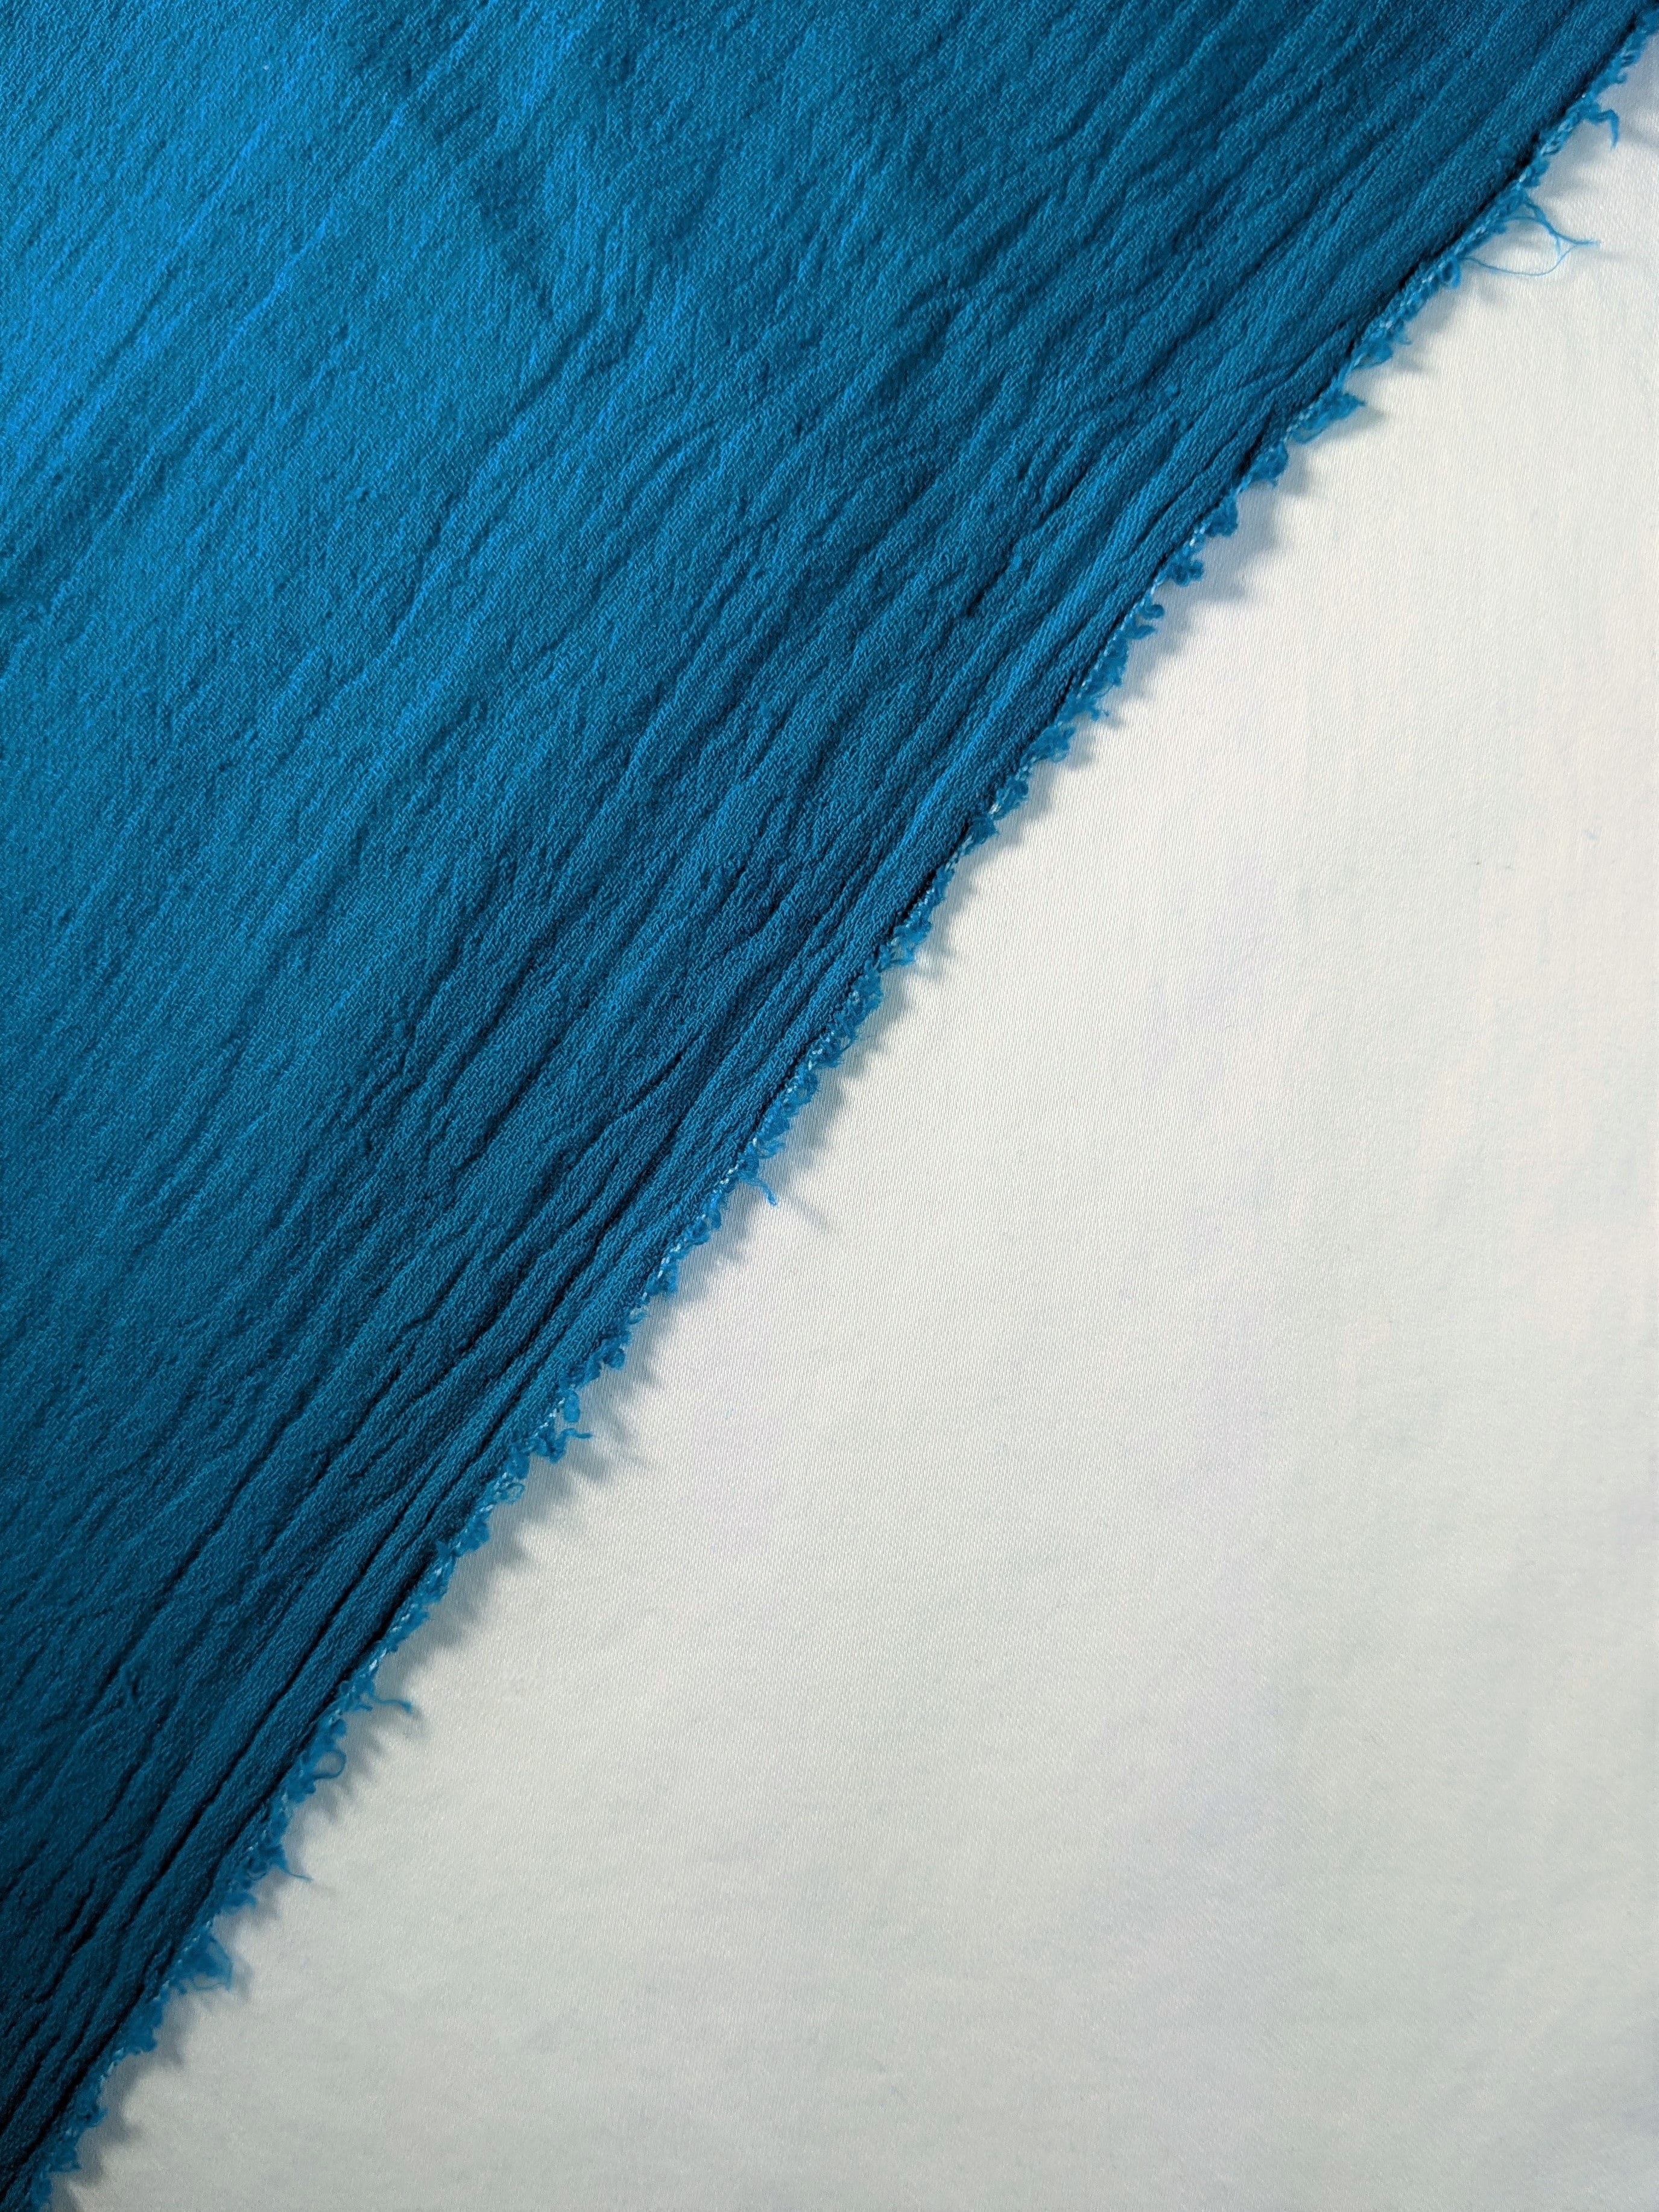 textures, texture, cloth, blue, surface UHD